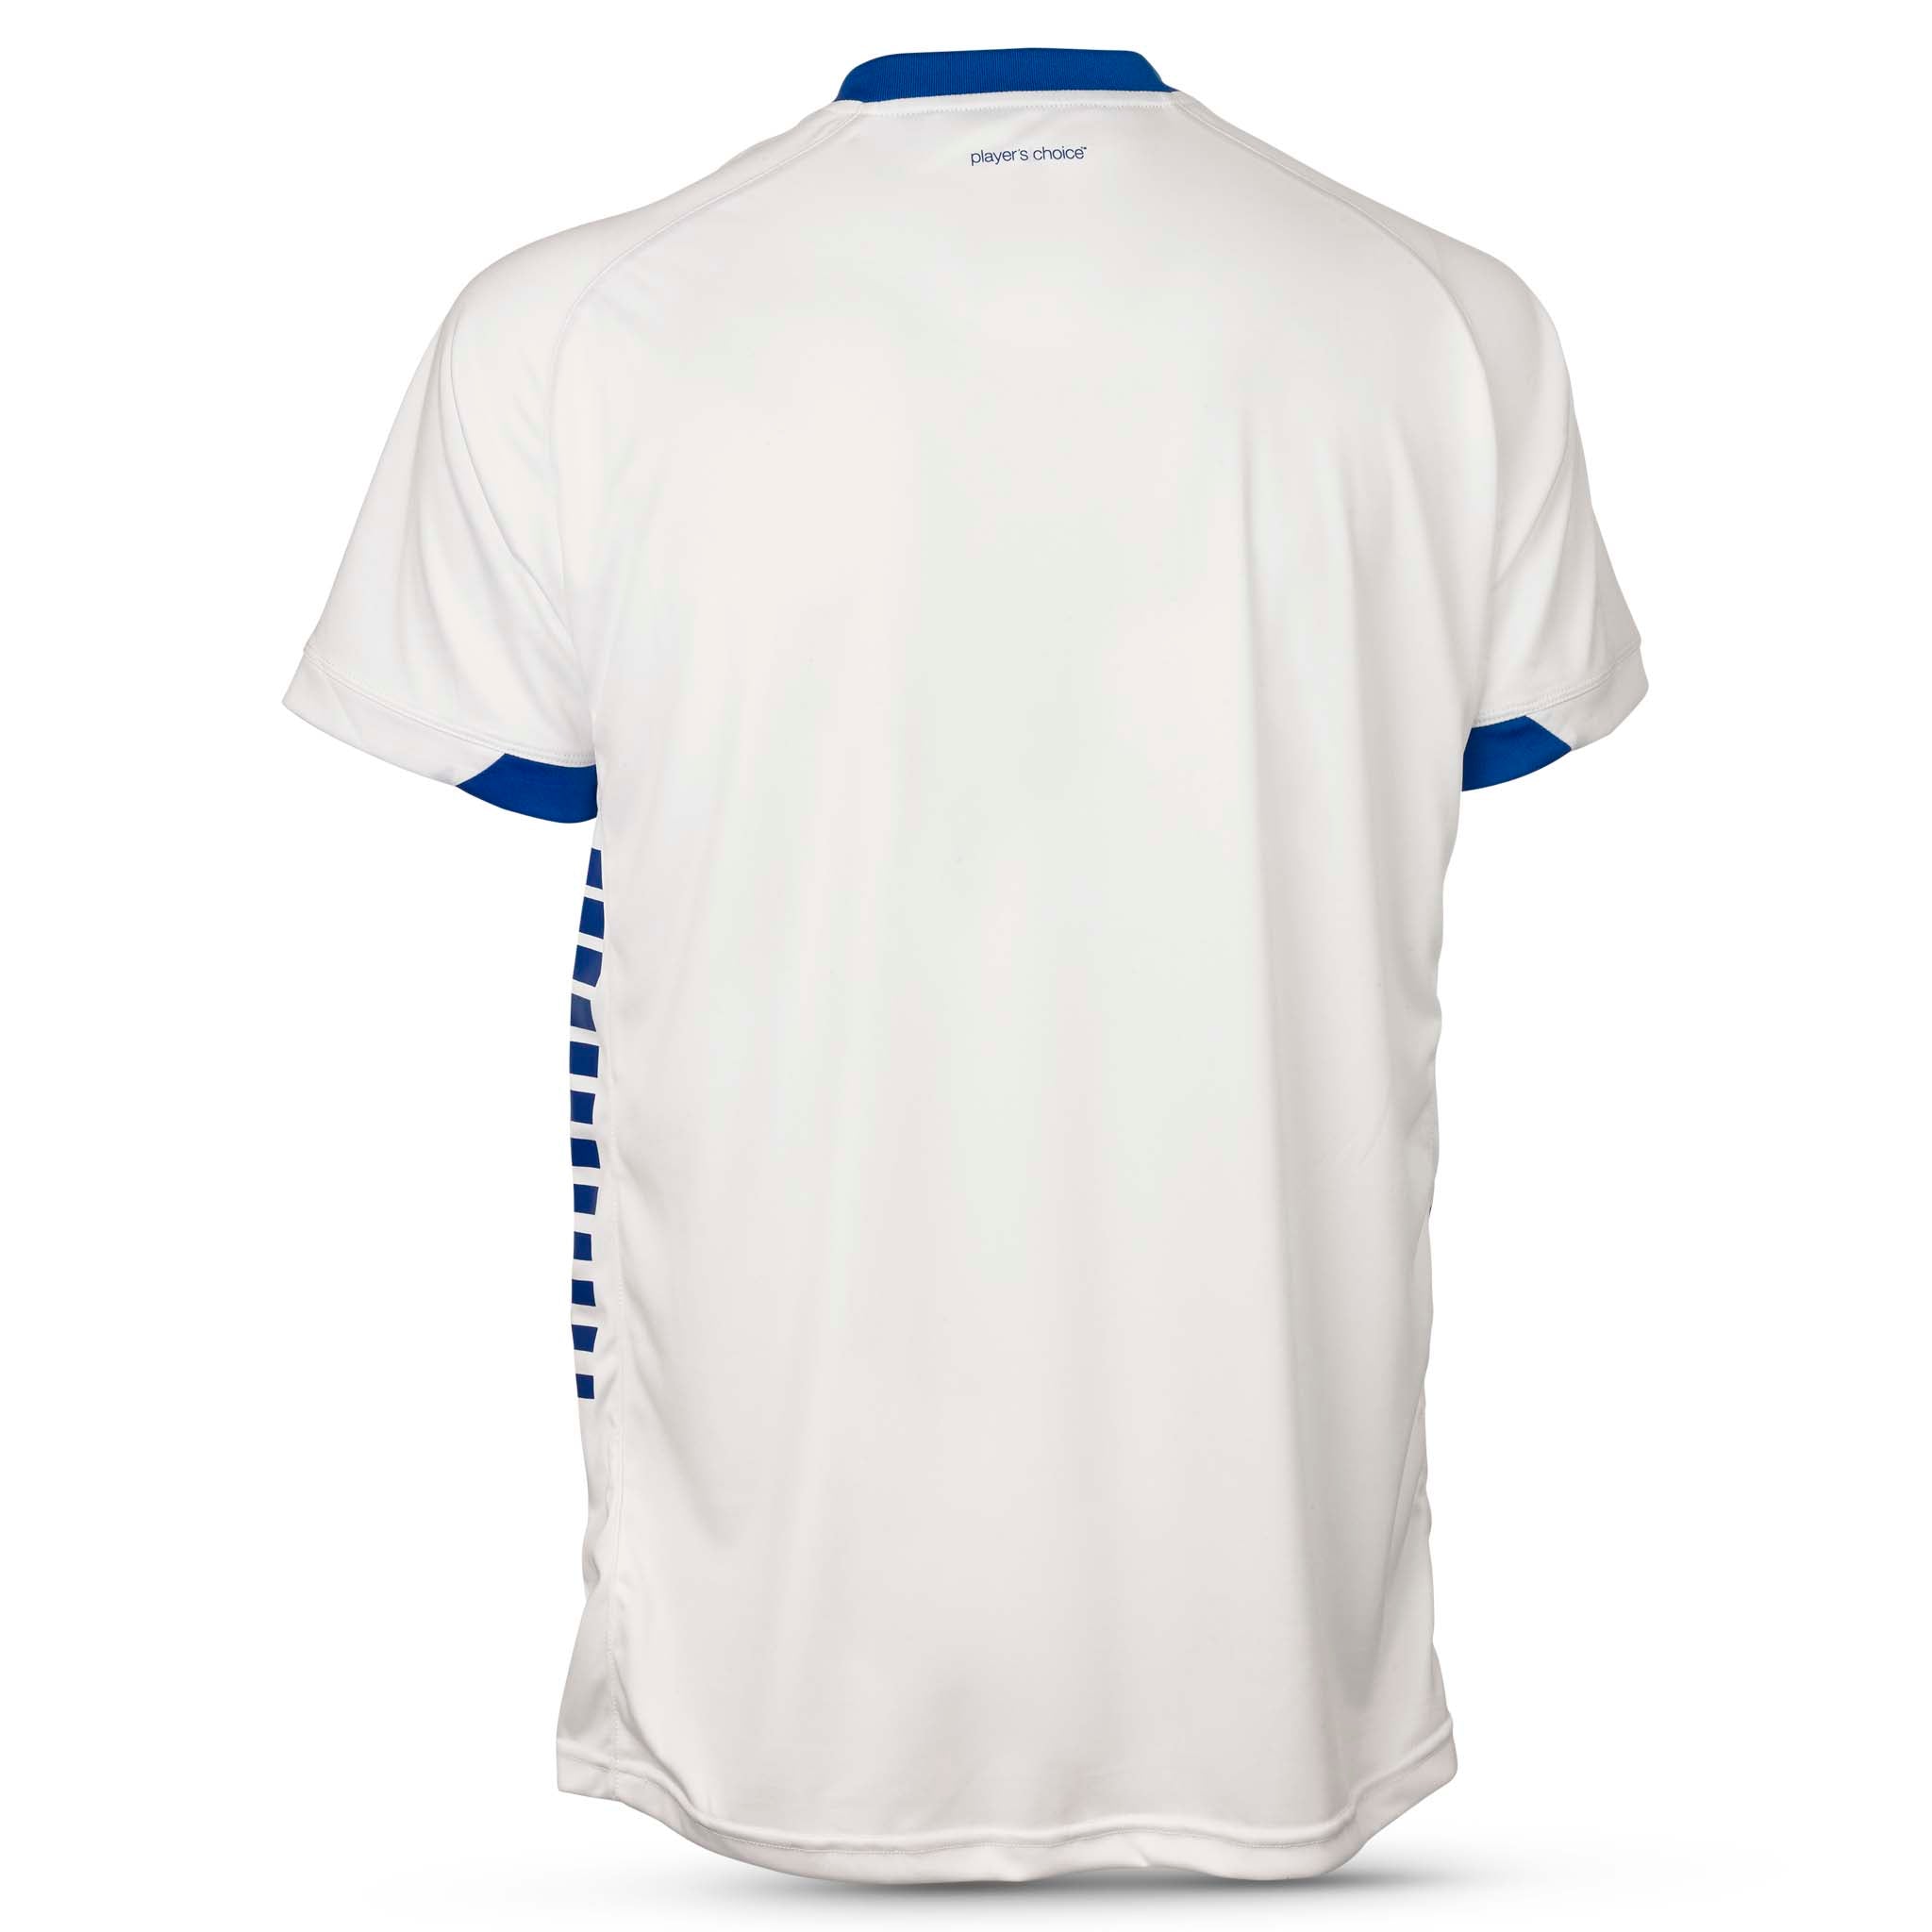 Spain Short Sleeve player shirt - Kids #colour_white/blue